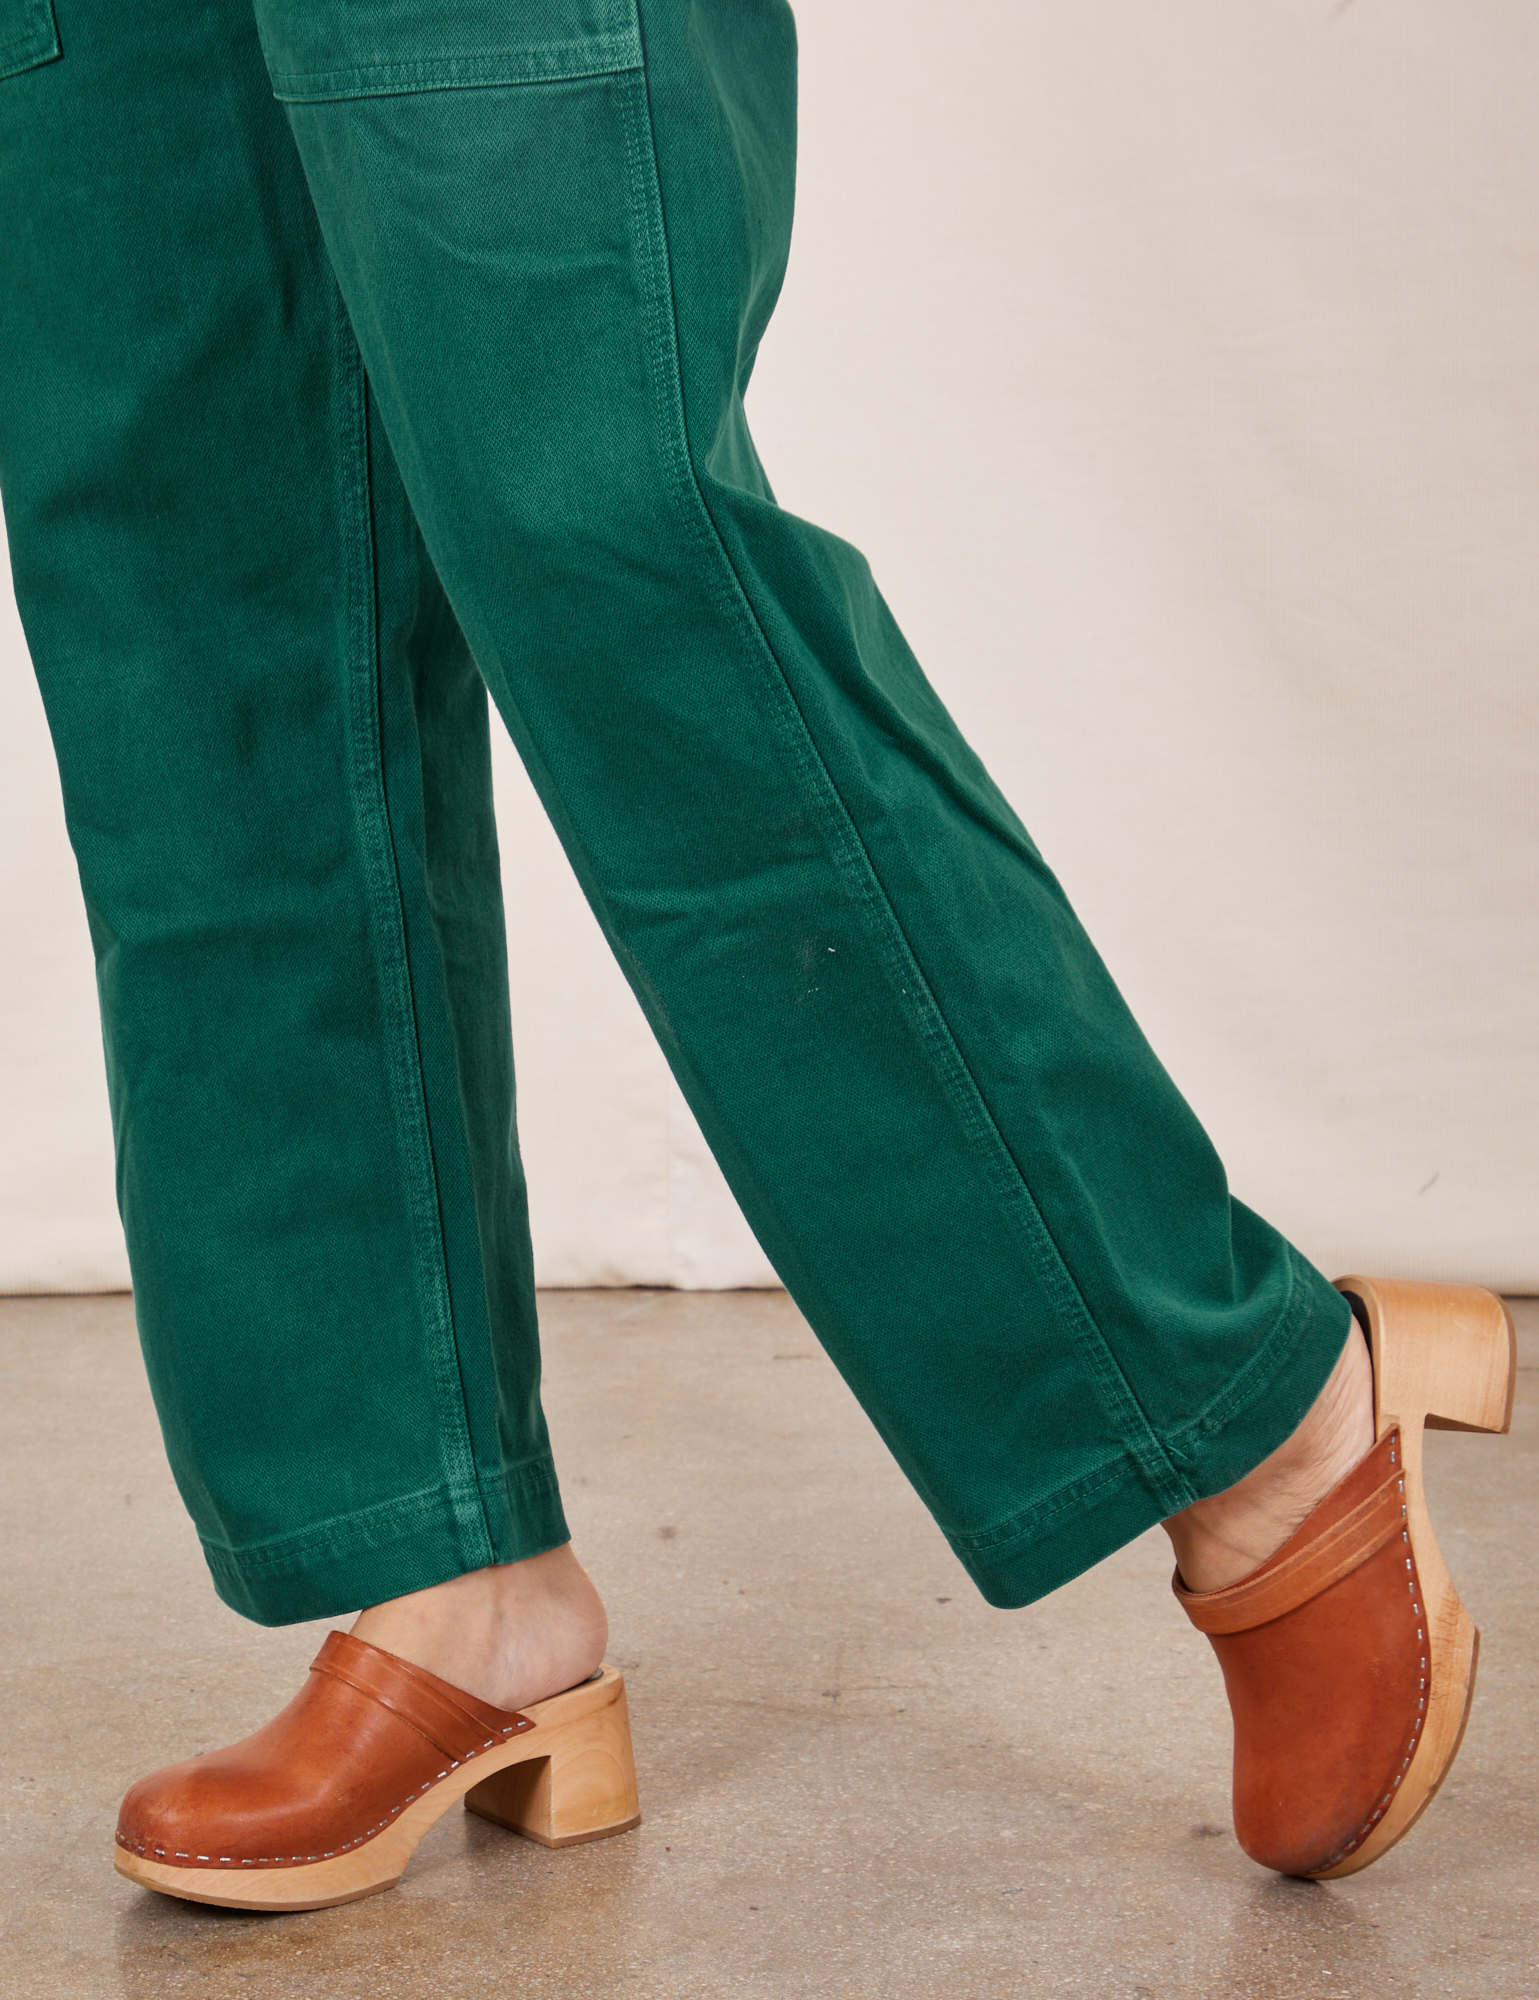 Pant leg close up of Original Overalls in Mono Hunter Green worn by Tiara